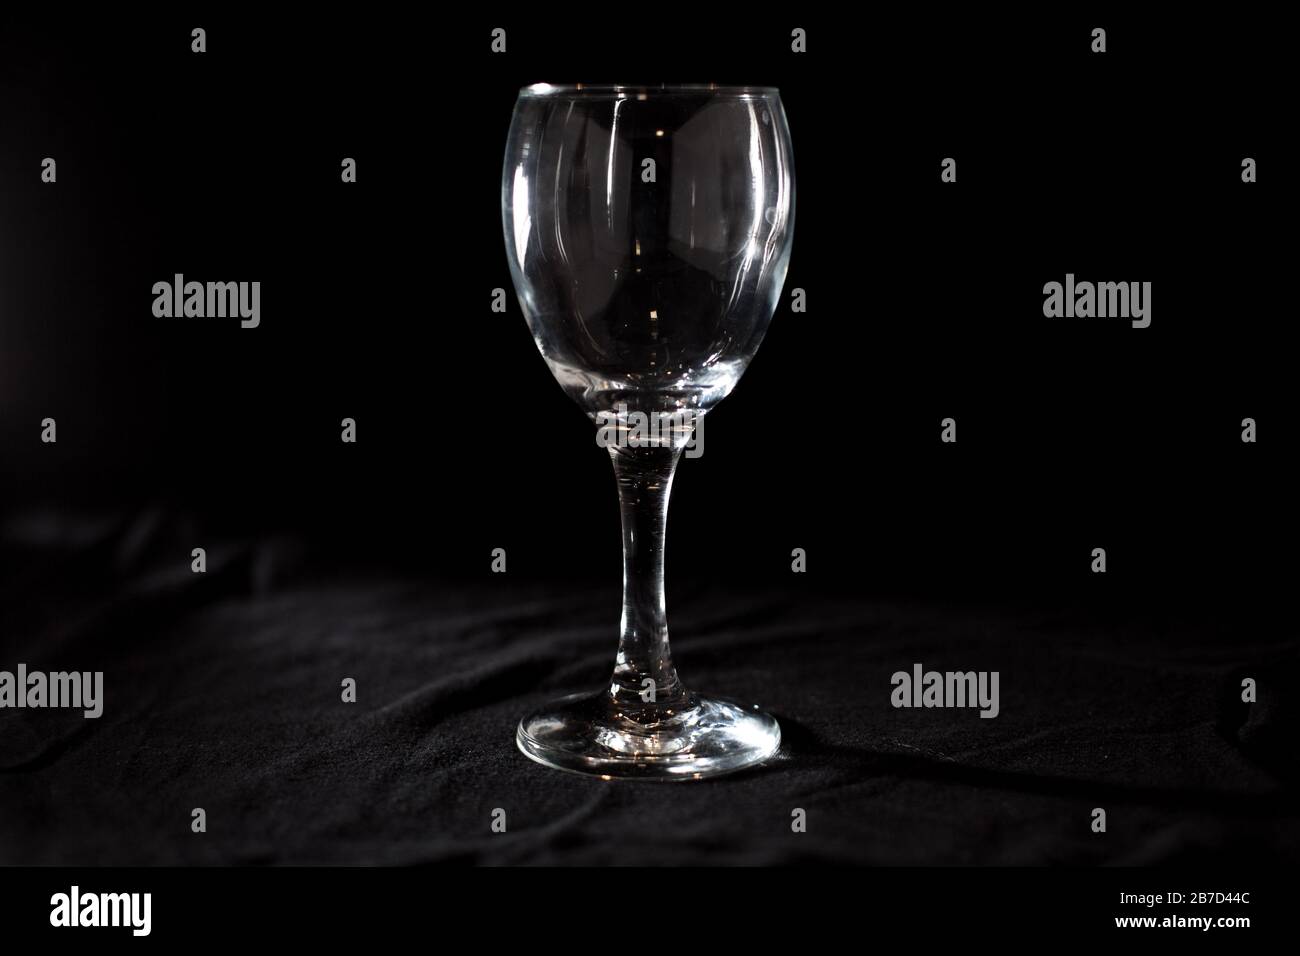 Empty wine glass on black background Stock Photo